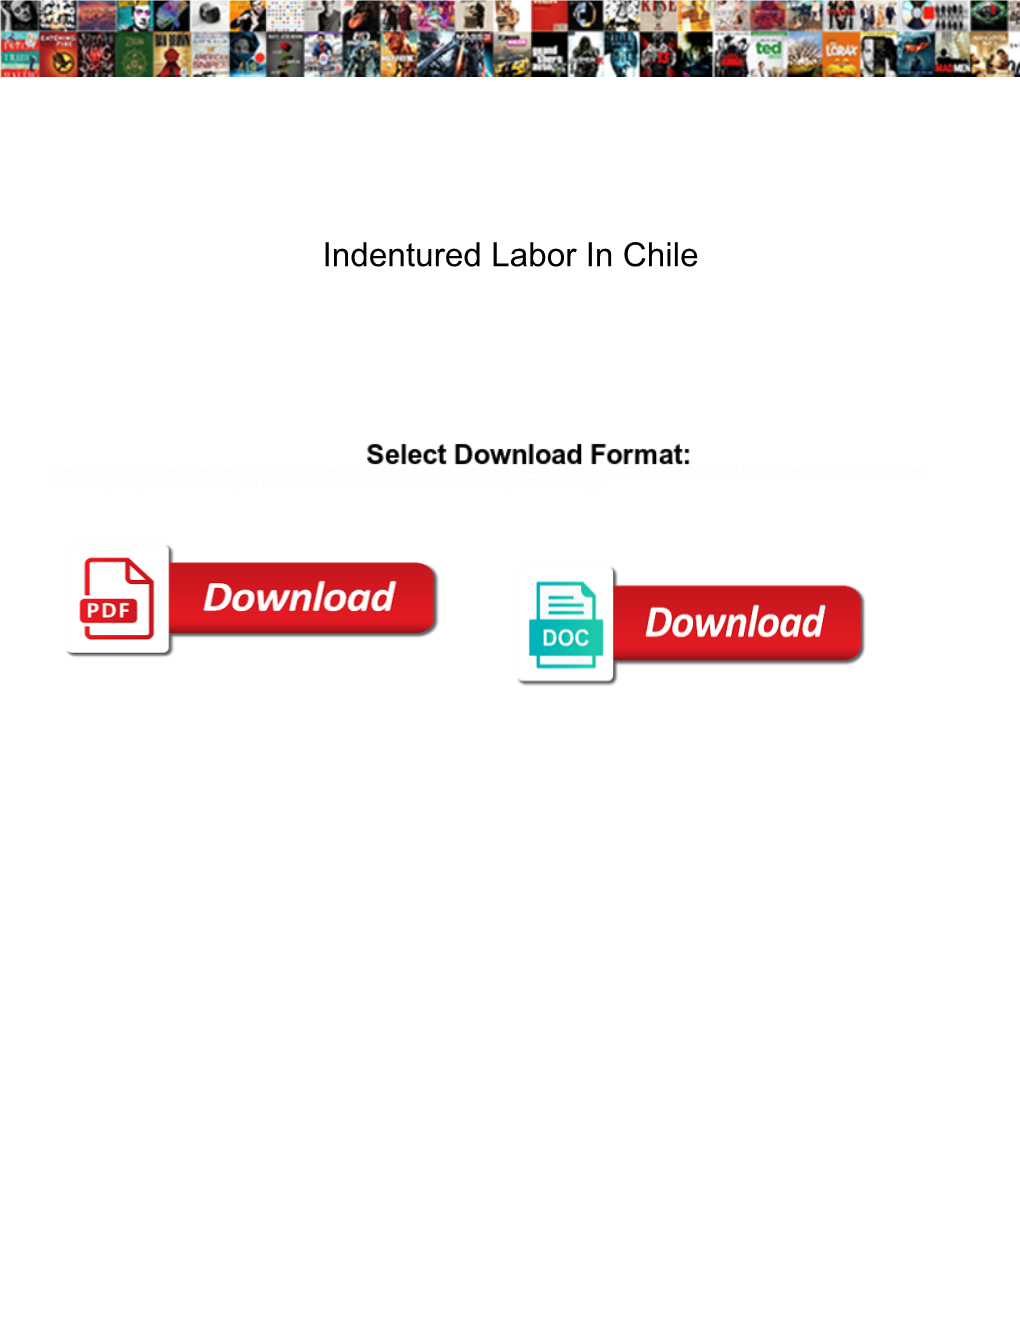 Indentured Labor in Chile